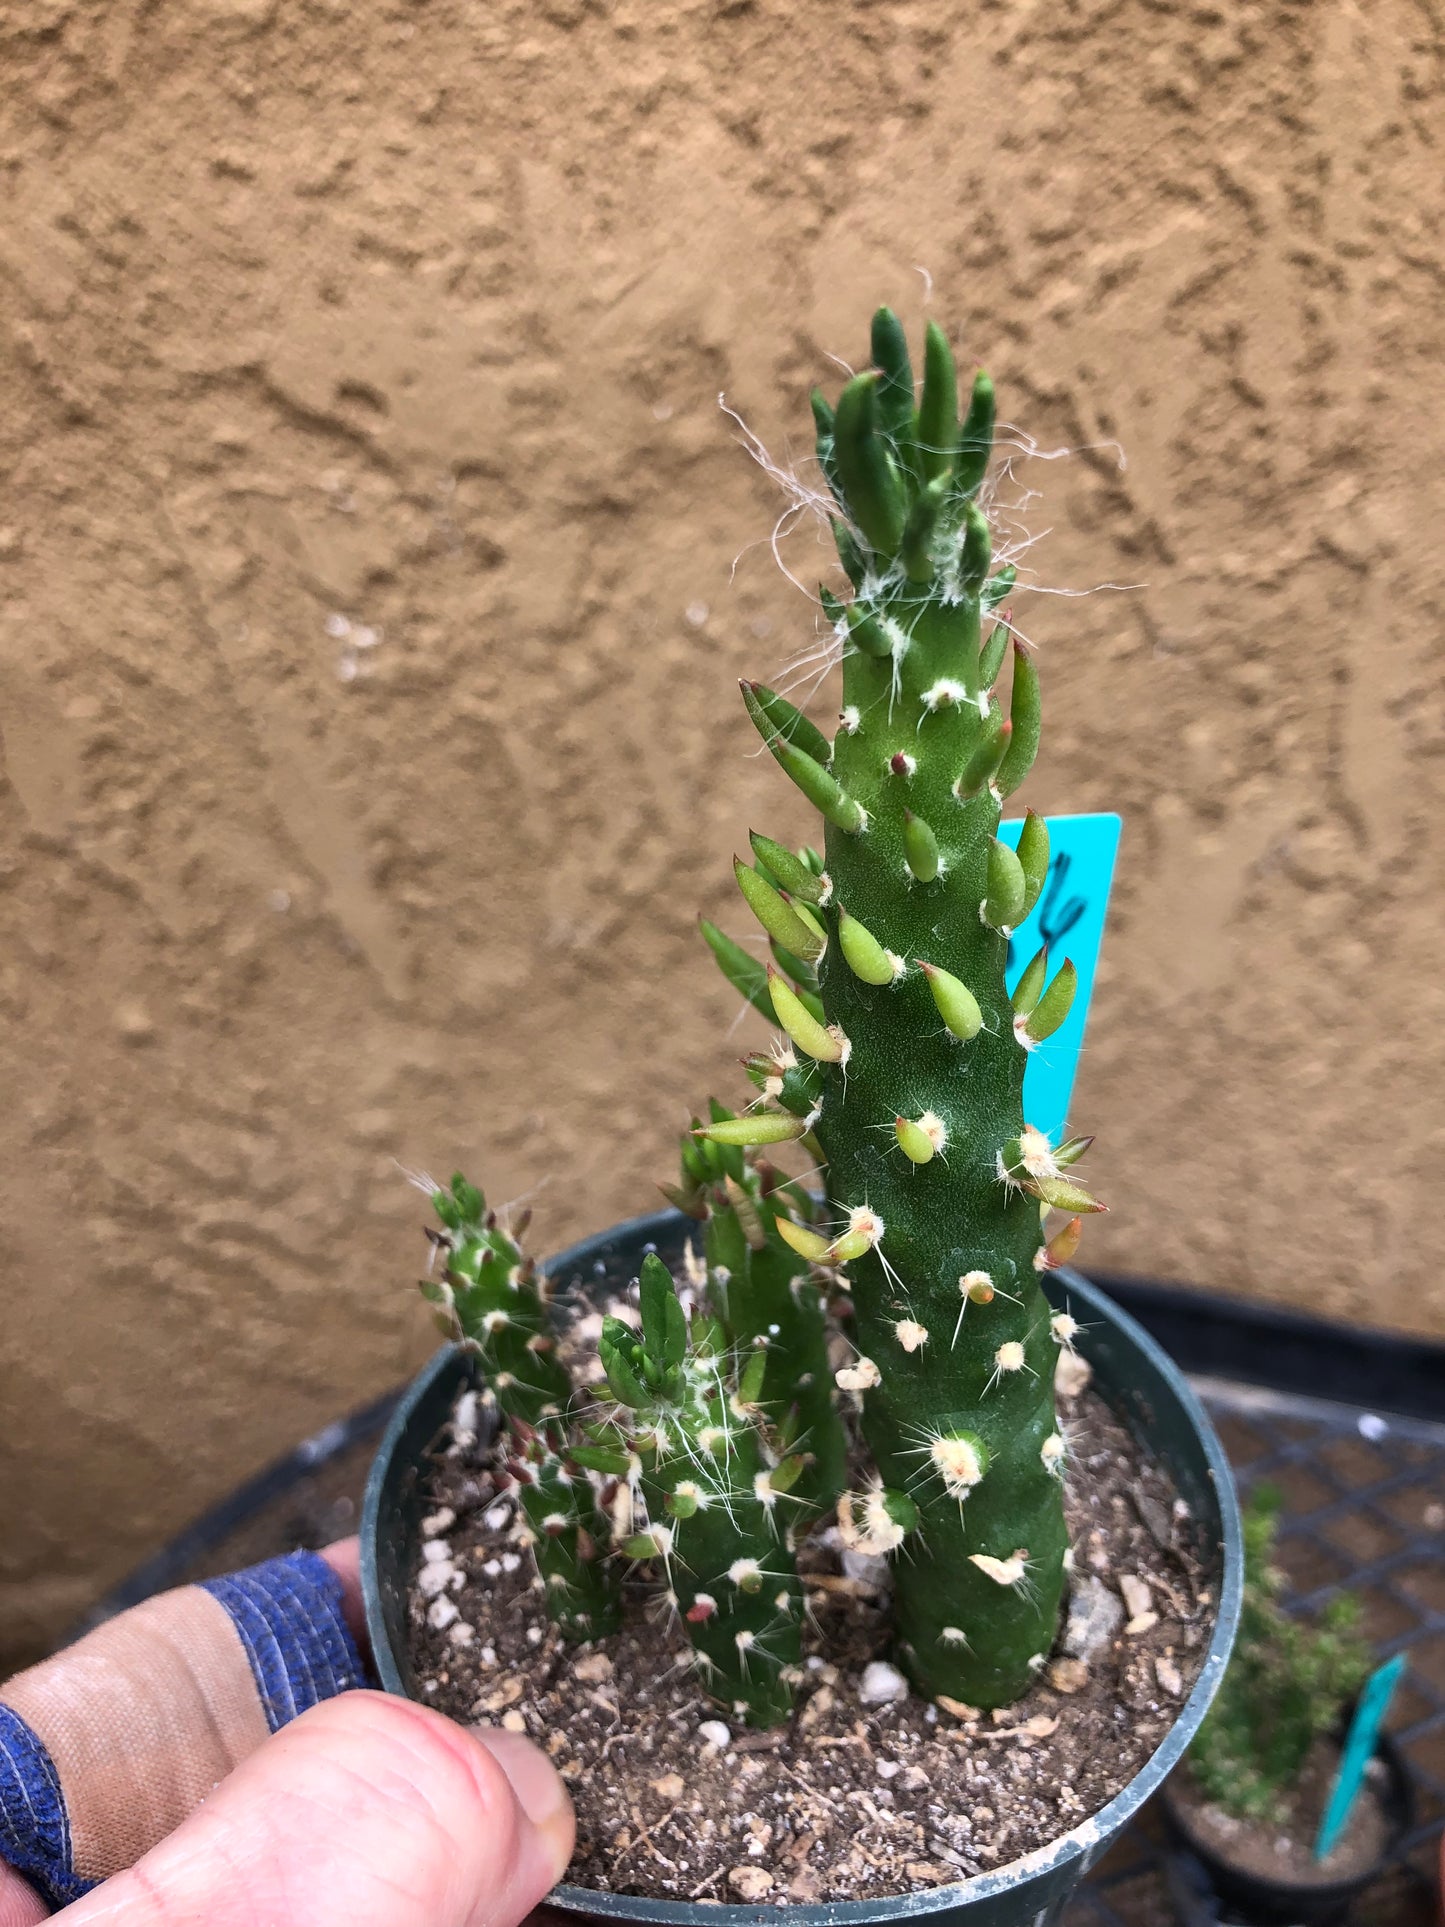 Austrocylindropuntia Cactus Gumbi Mini Eve's Needle 5"Tall #56G